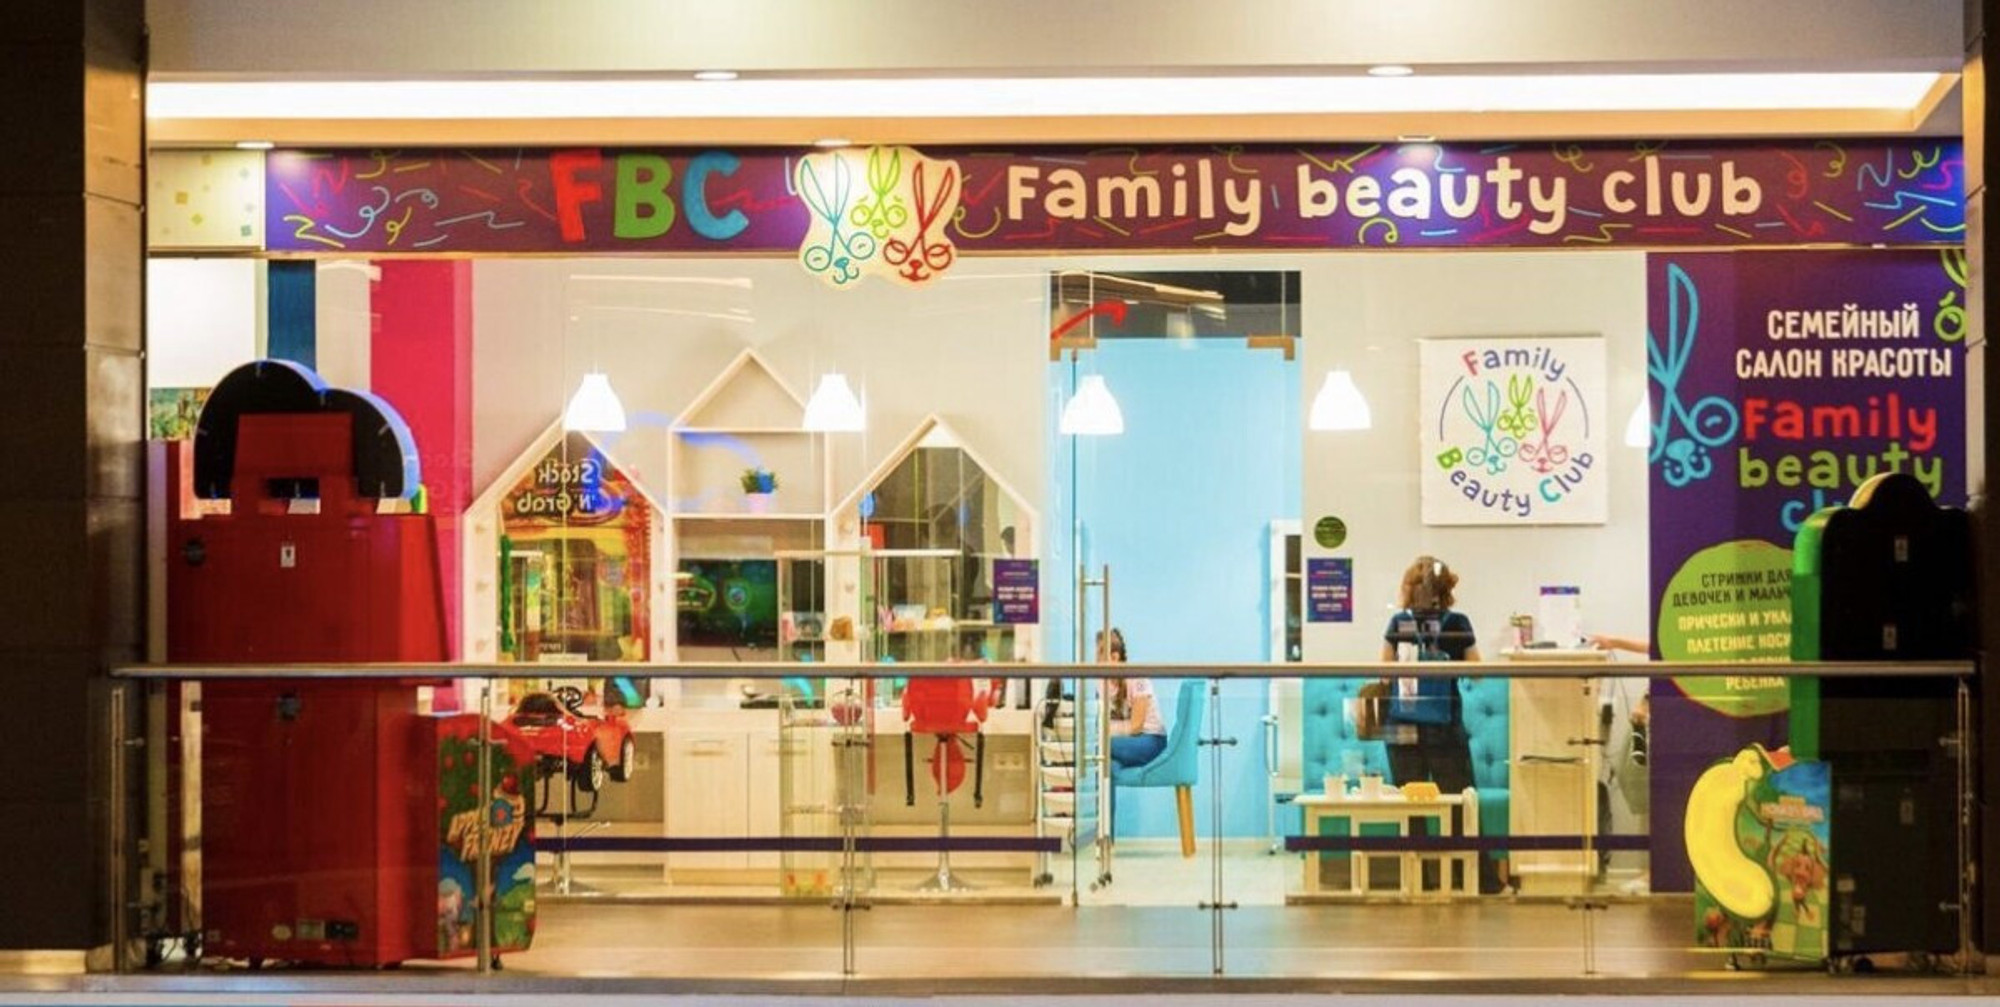 Семейный салон красоты “Family Beauty Club”